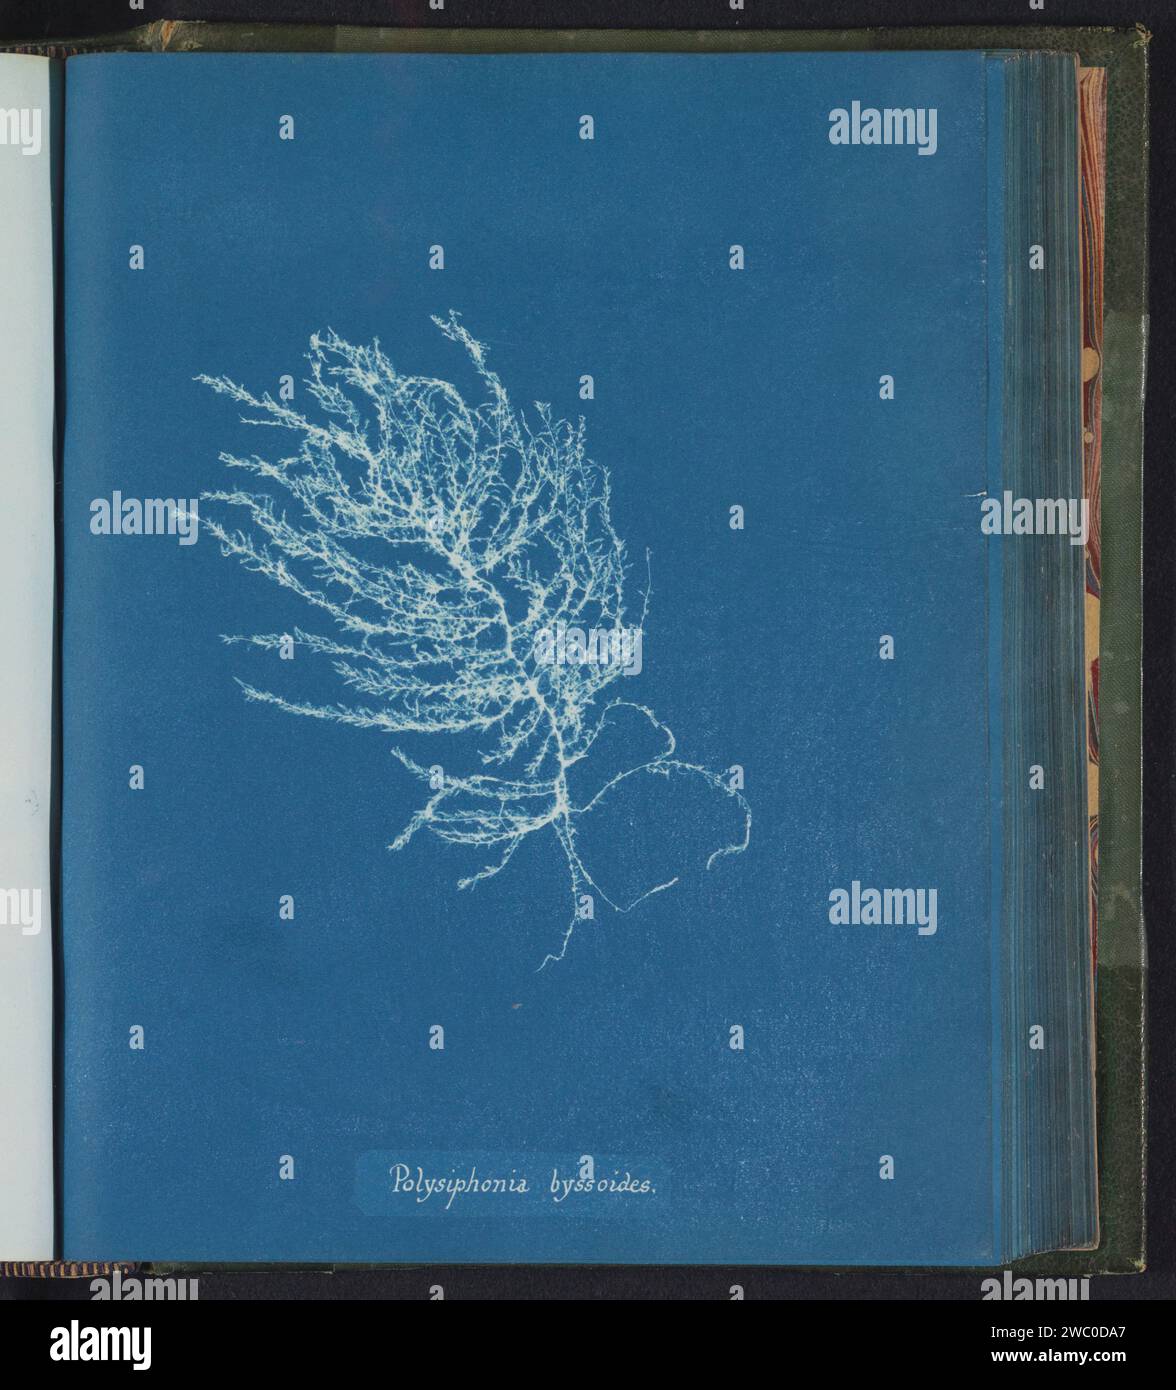 Polysiphonia byssoides, Anna Atkins, c. 1843 - c. 1853 photograph  United Kingdom photographic support cyanotype algae, seaweed Stock Photo